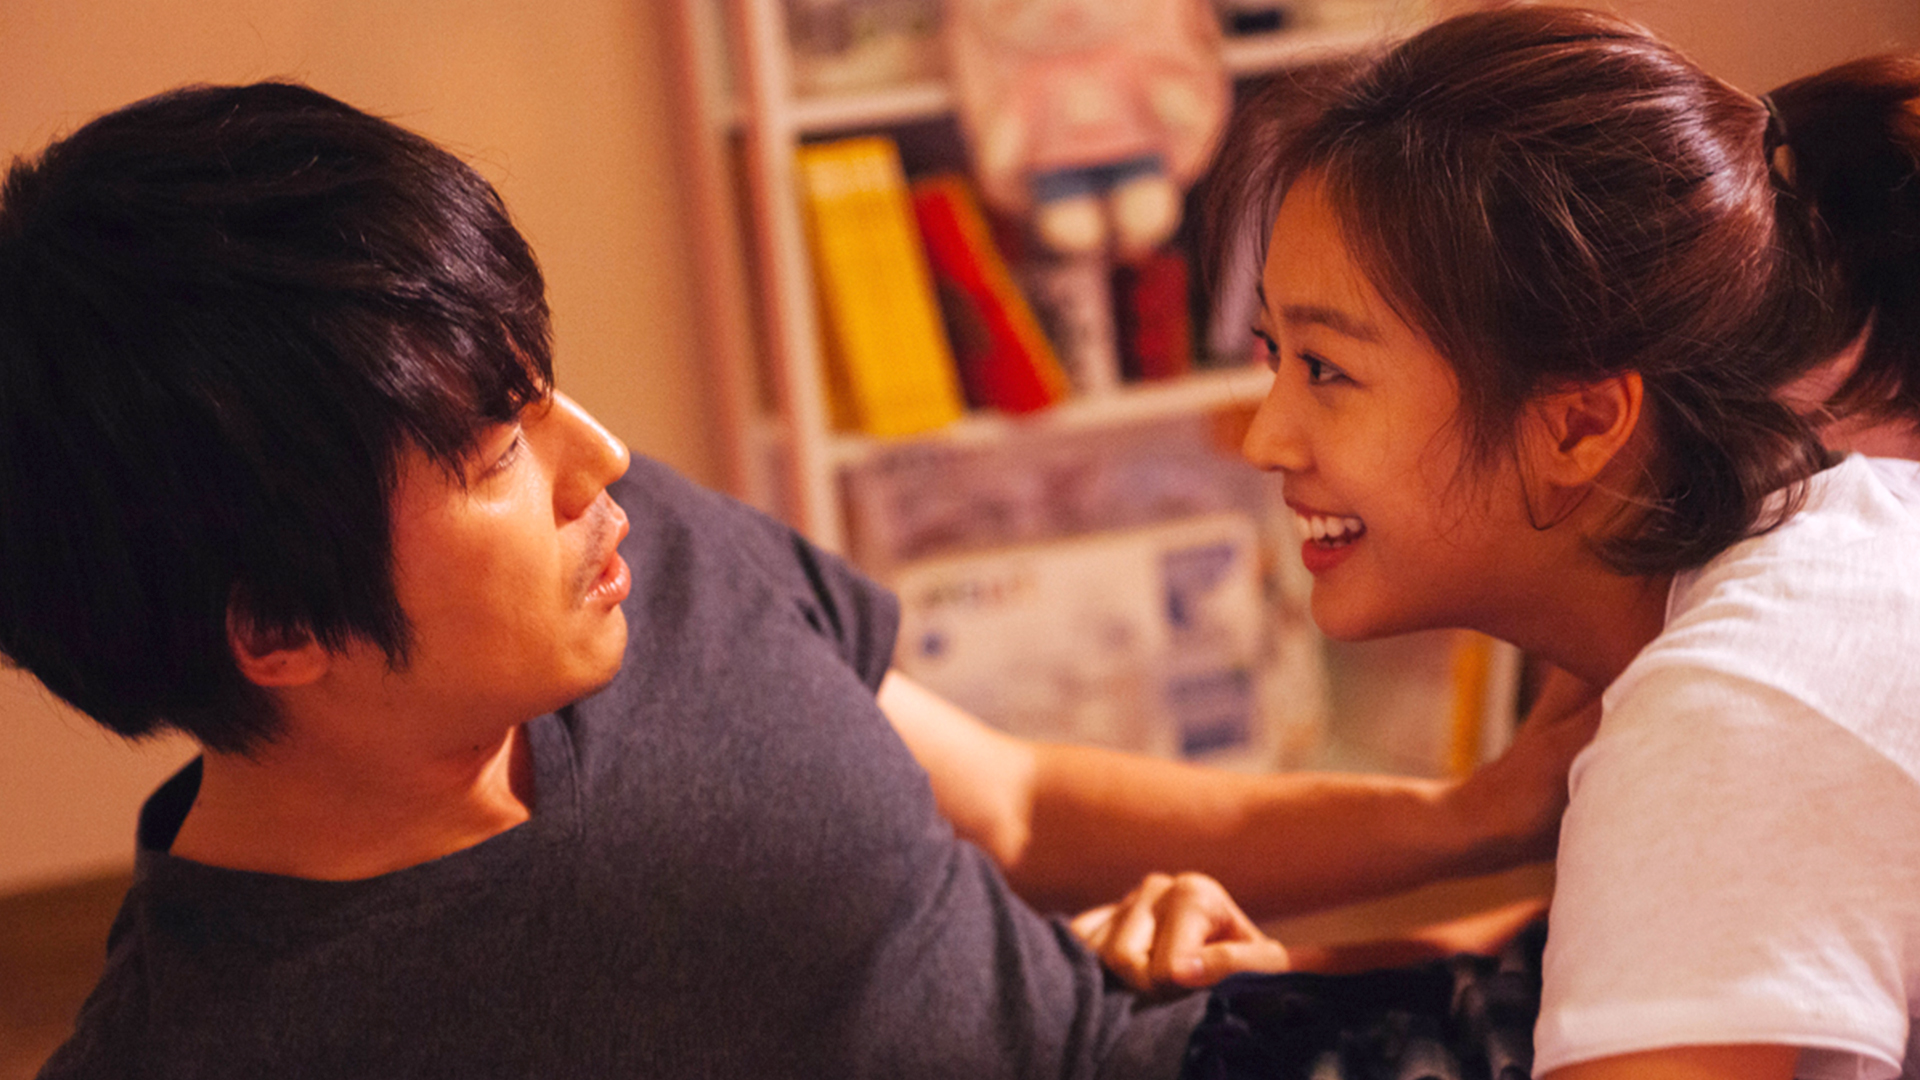 Korean Movie Review: Innocent Thing (가시) | Young Ajummah